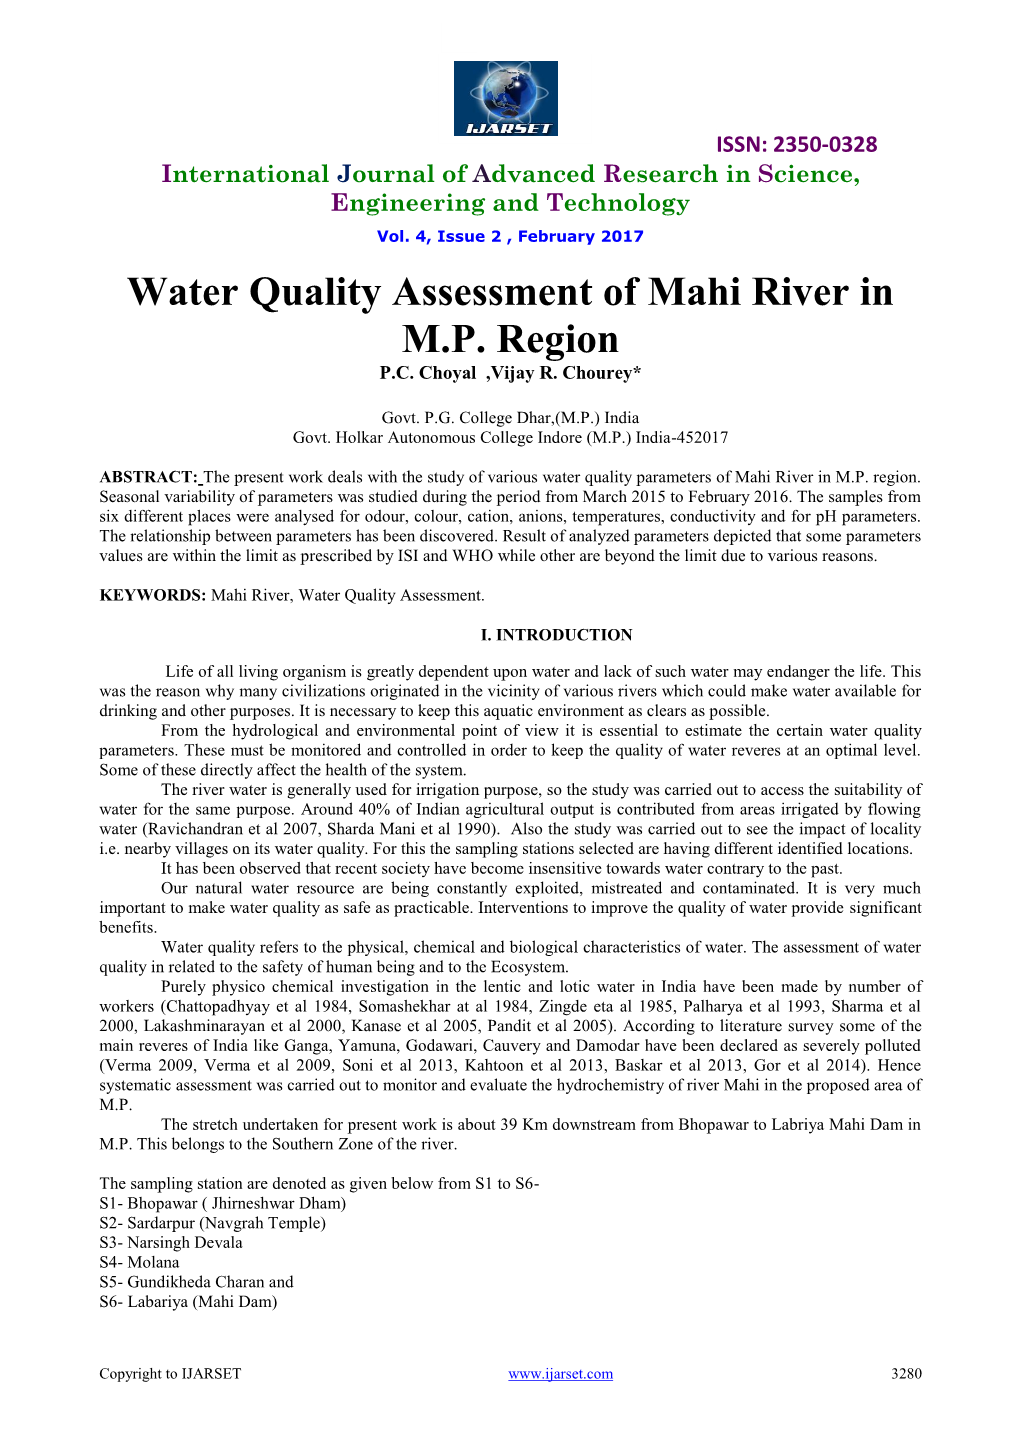 Water Quality Assessment of Mahi River in M.P. Region P.C